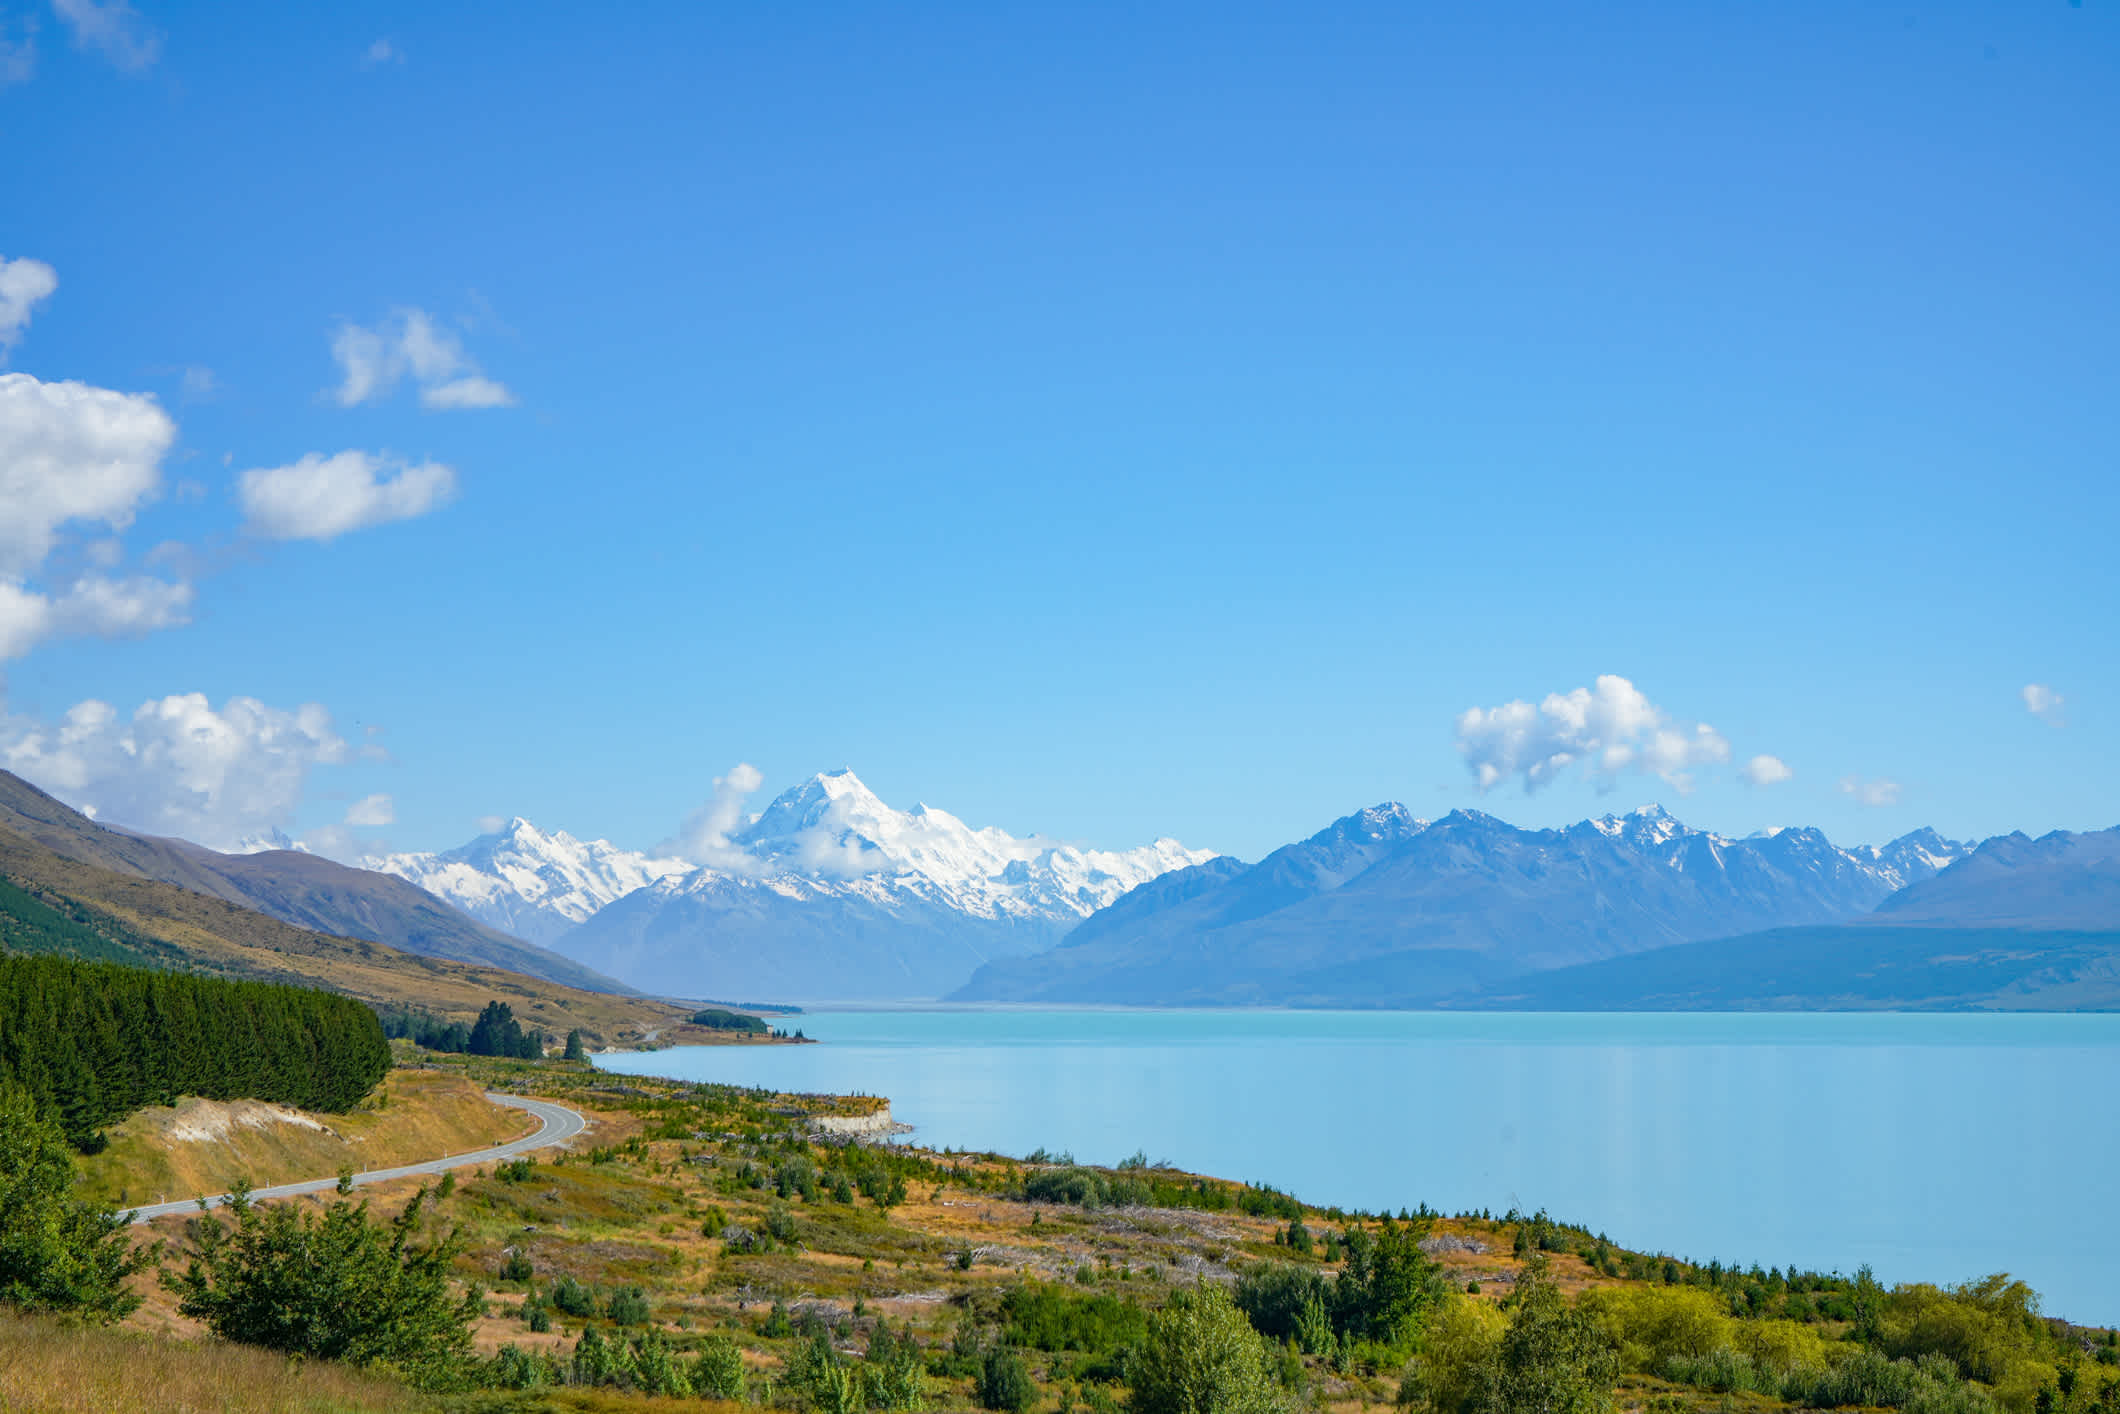 Lake Pukaki with Mount Cook Glacier Mountain Range in the background, Canterbury, New Zealand.

